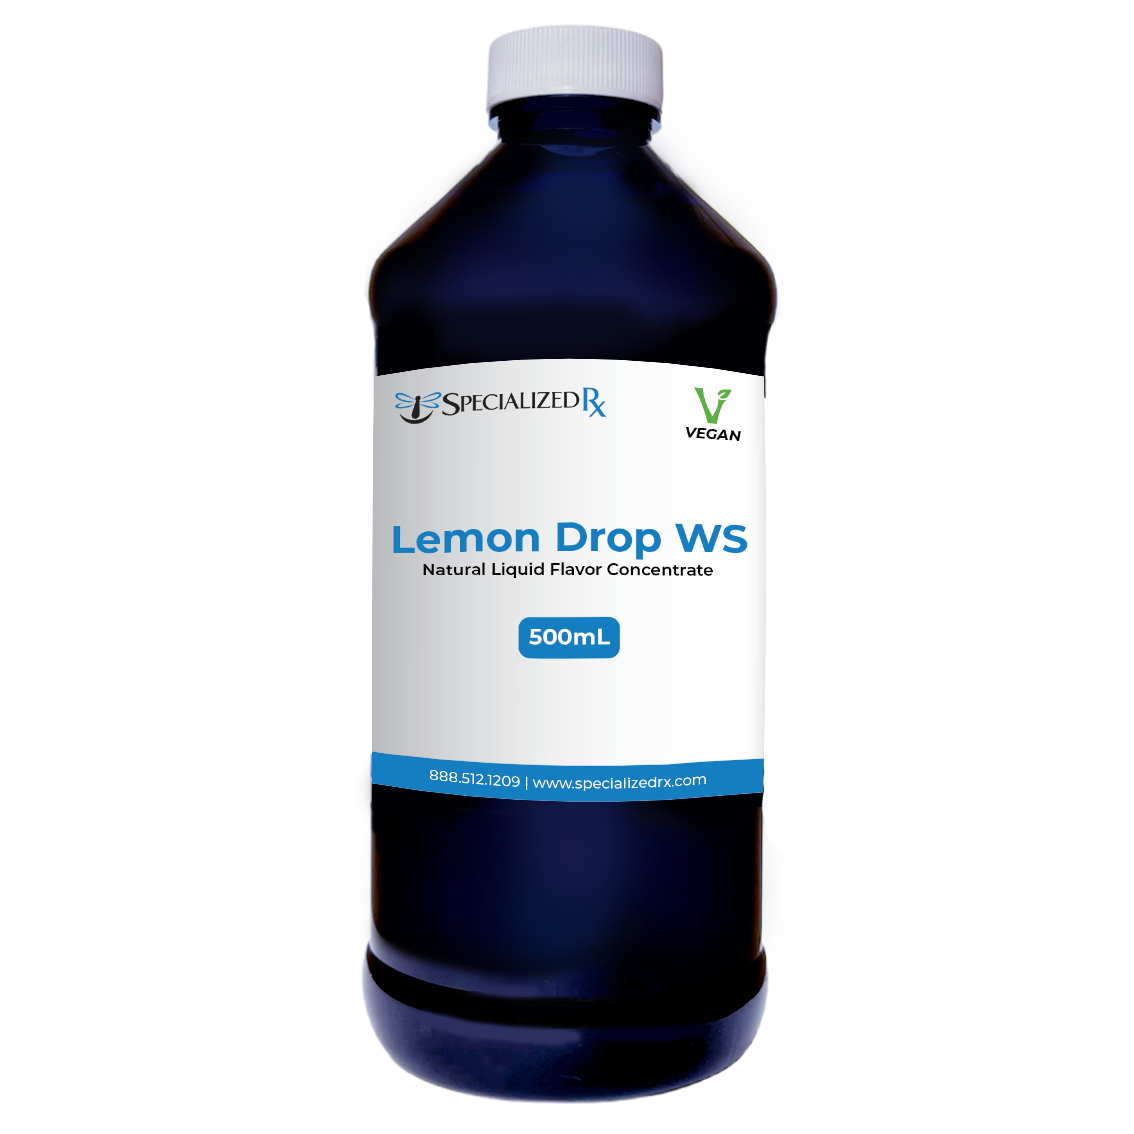 Lemon Drop WS Natural Liquid Flavor Concentrate